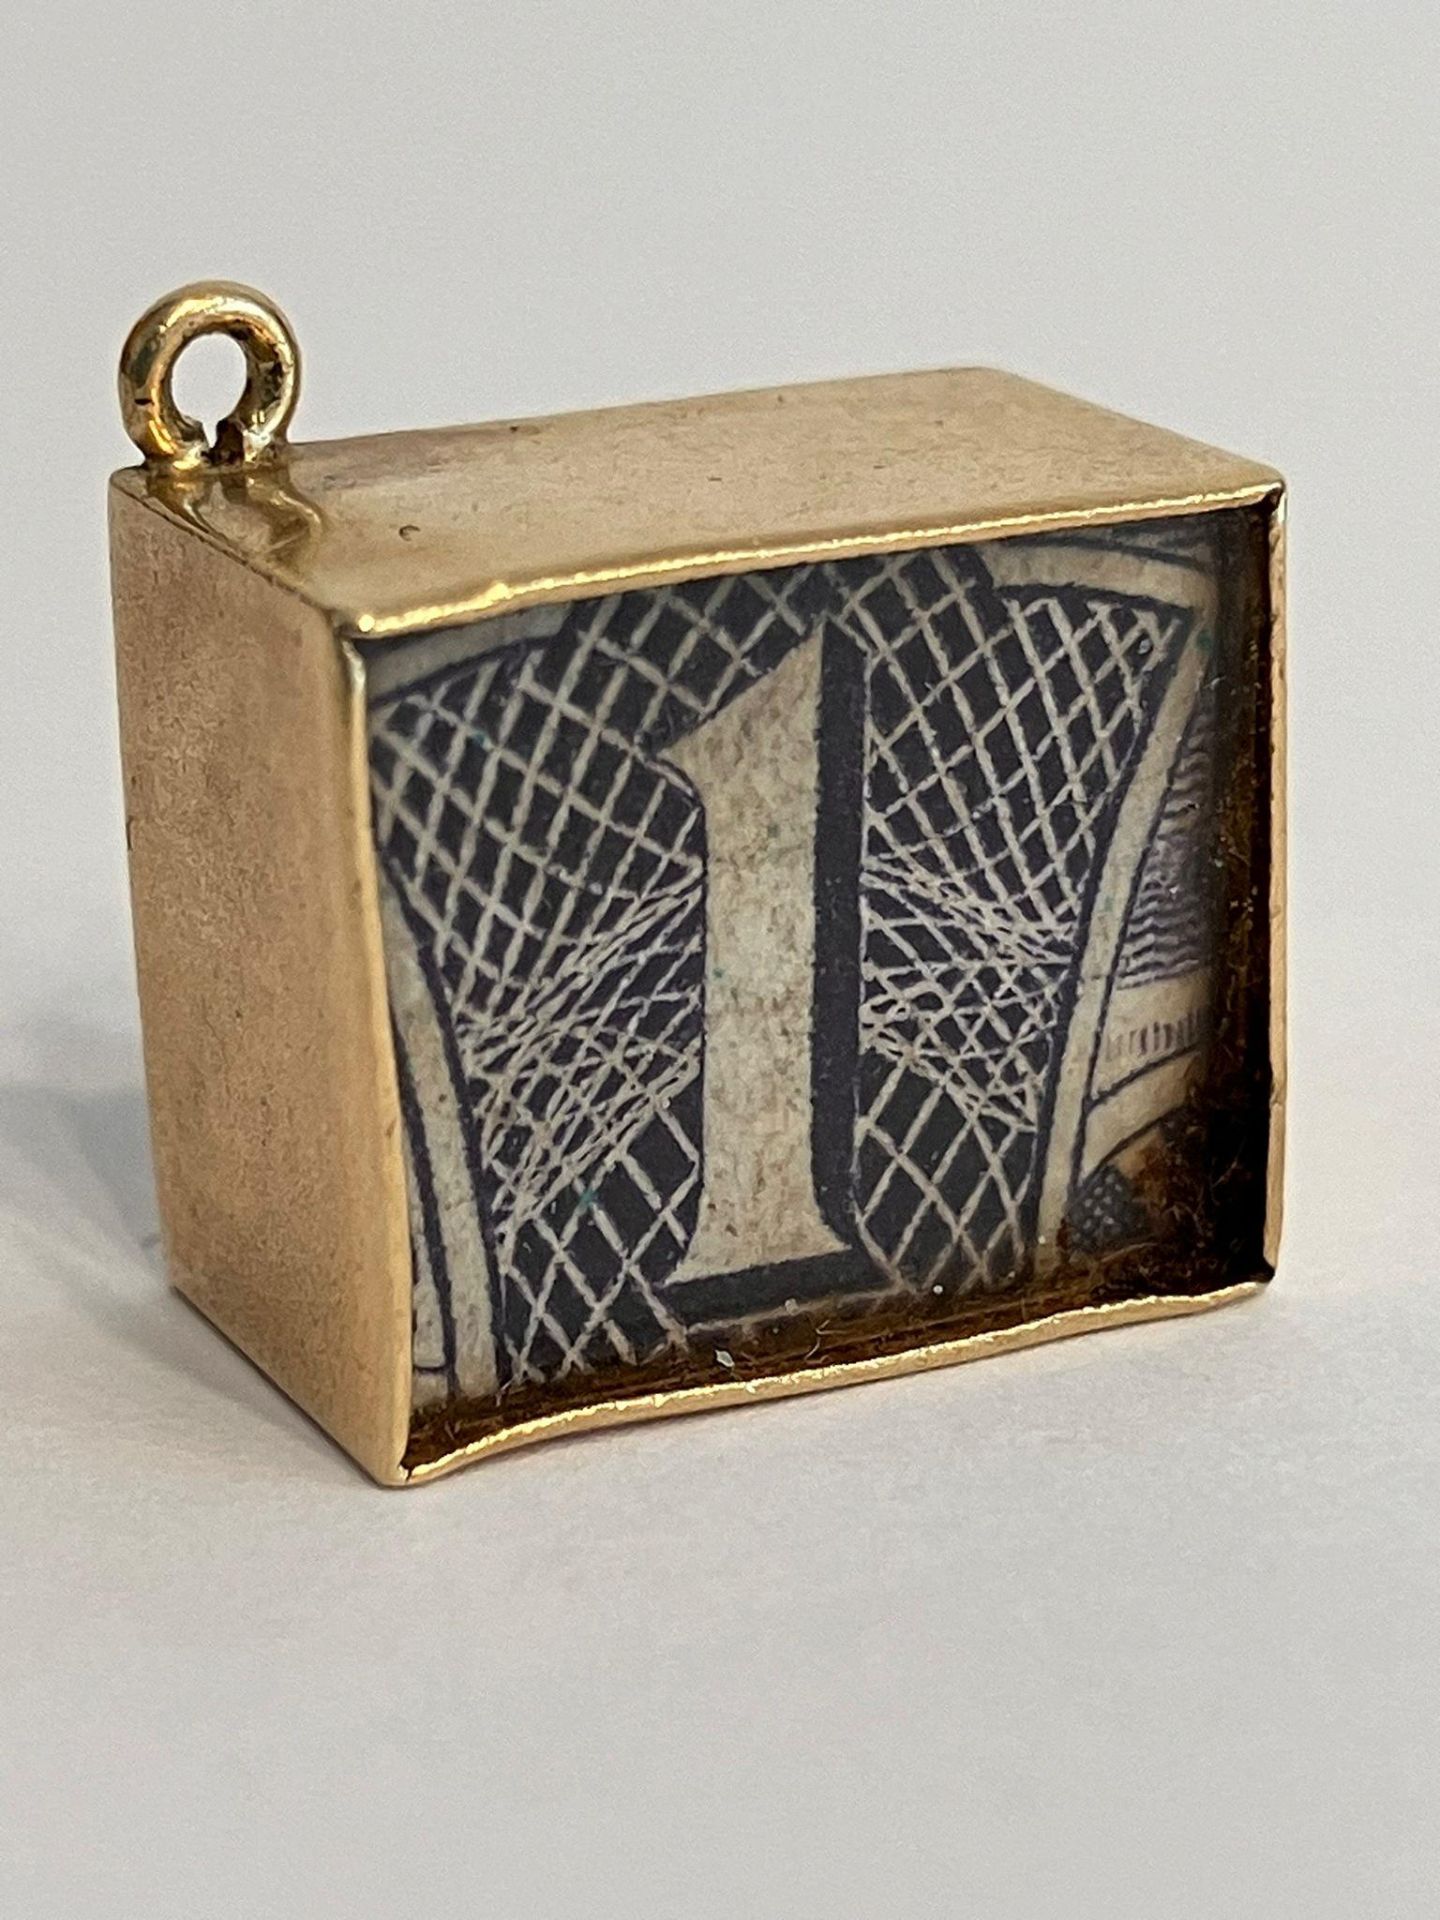 Vintage 9 carat GOLD CHARM with folded BLUE £1 NOTE inside a windowed 9 carat GOLD Case. Full UK